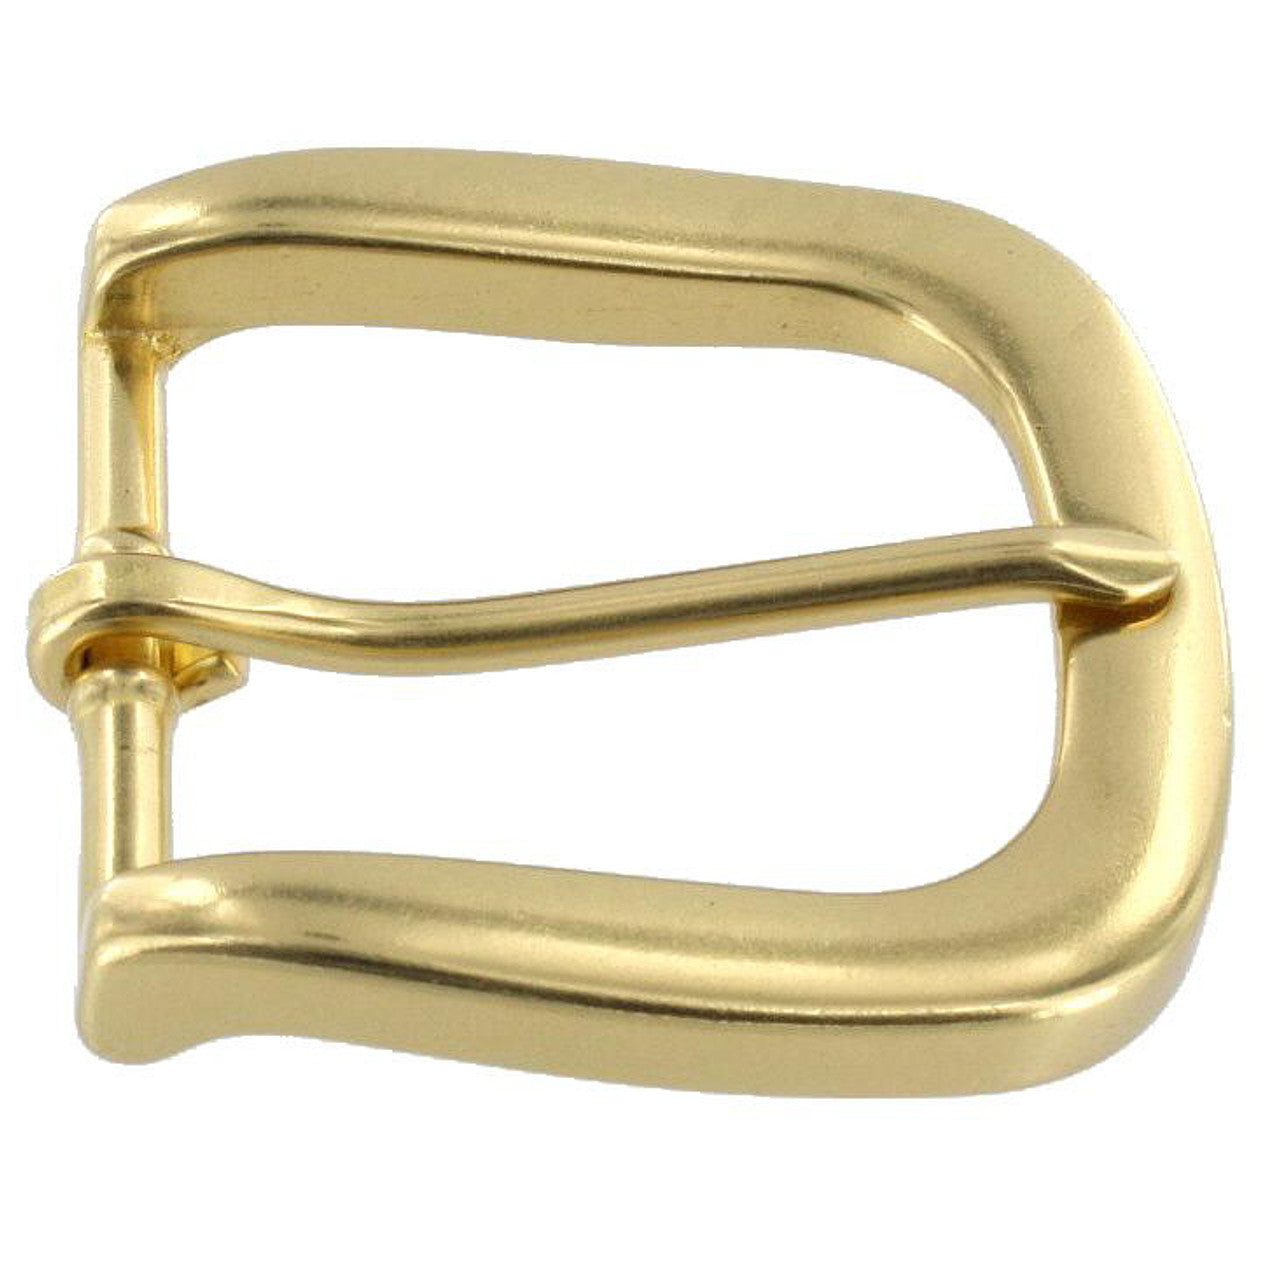 Belt Buckle, Solid Brass - Natural